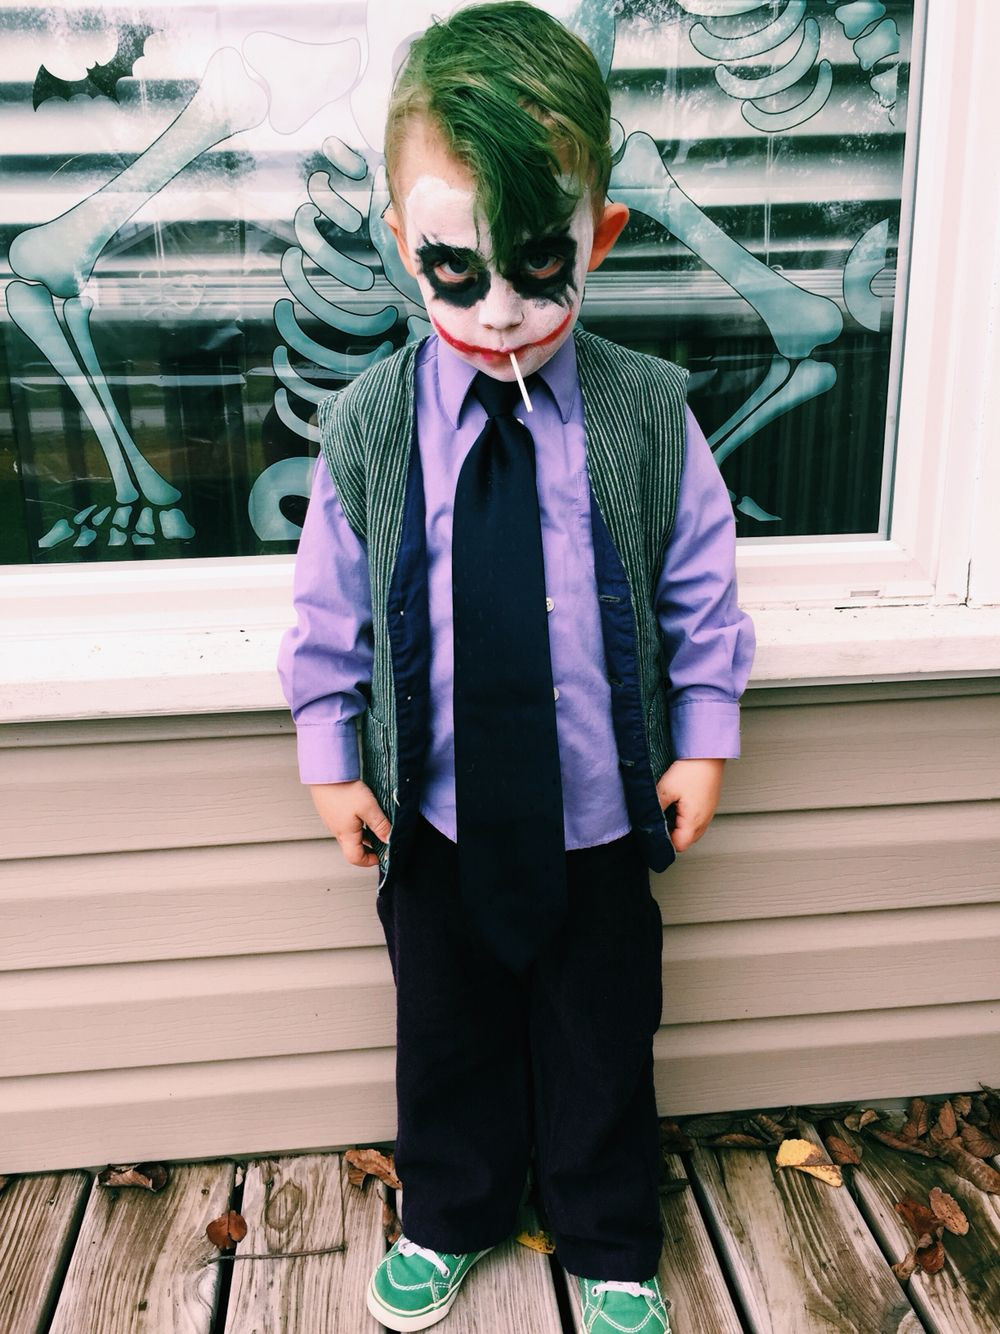 Best ideas about DIY Boys Halloween Costumes
. Save or Pin DIY Joker toddler costume Halloweenie Now.